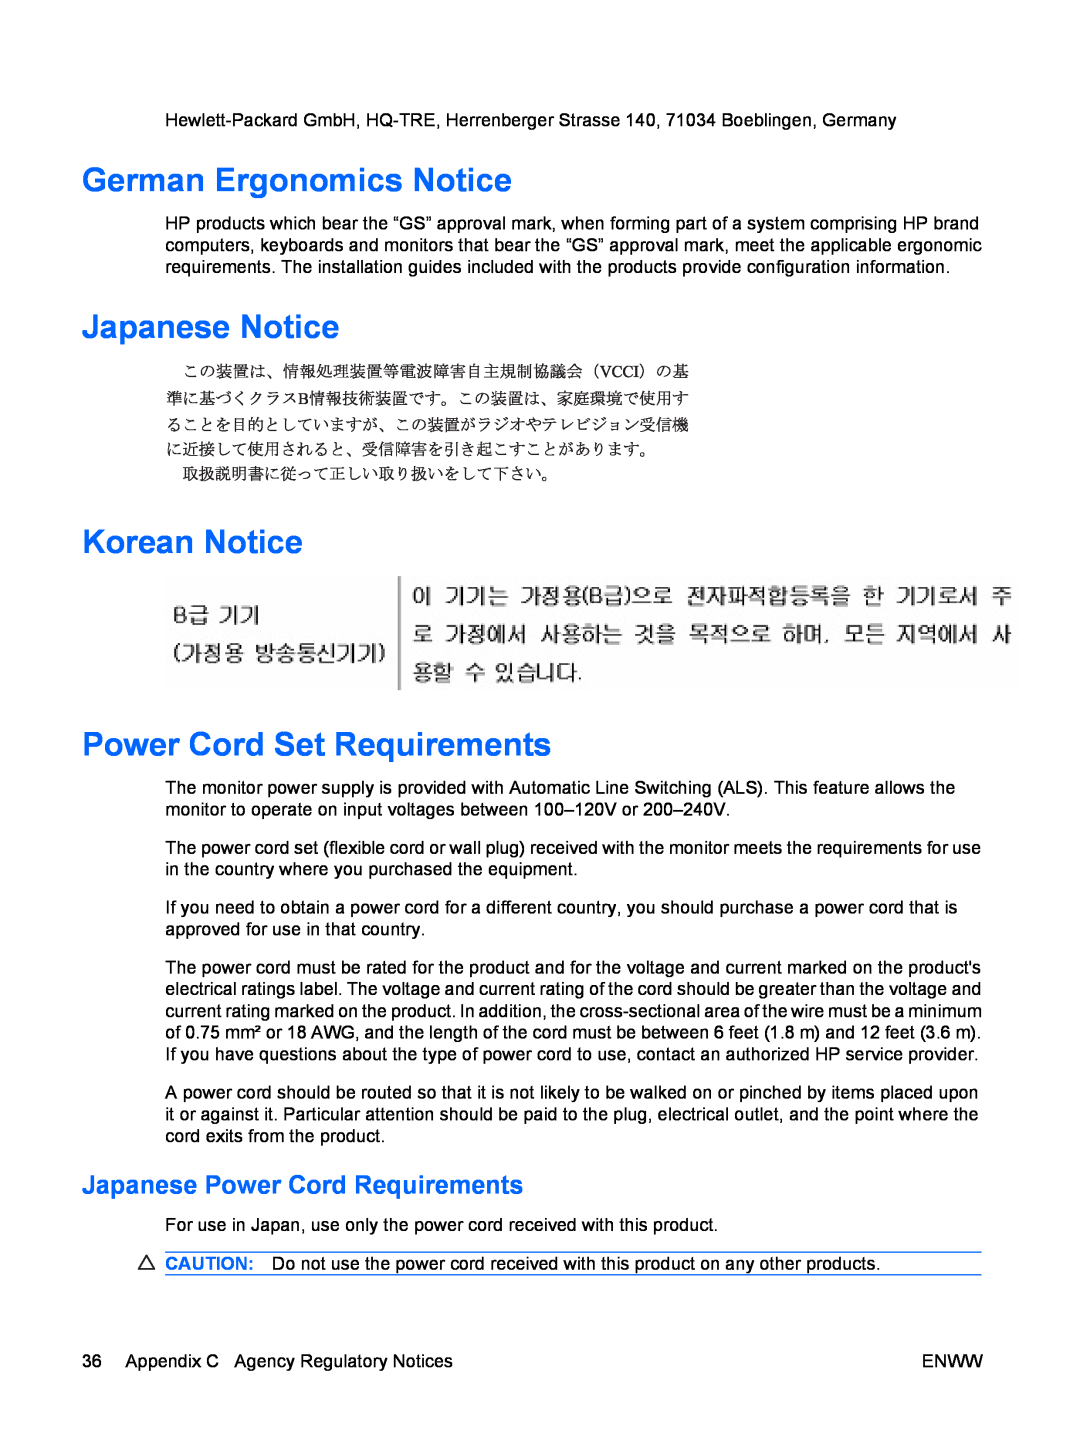 HP LE2201w, LE1901wm manual German Ergonomics Notice, Japanese Notice Korean Notice Power Cord Set Requirements 